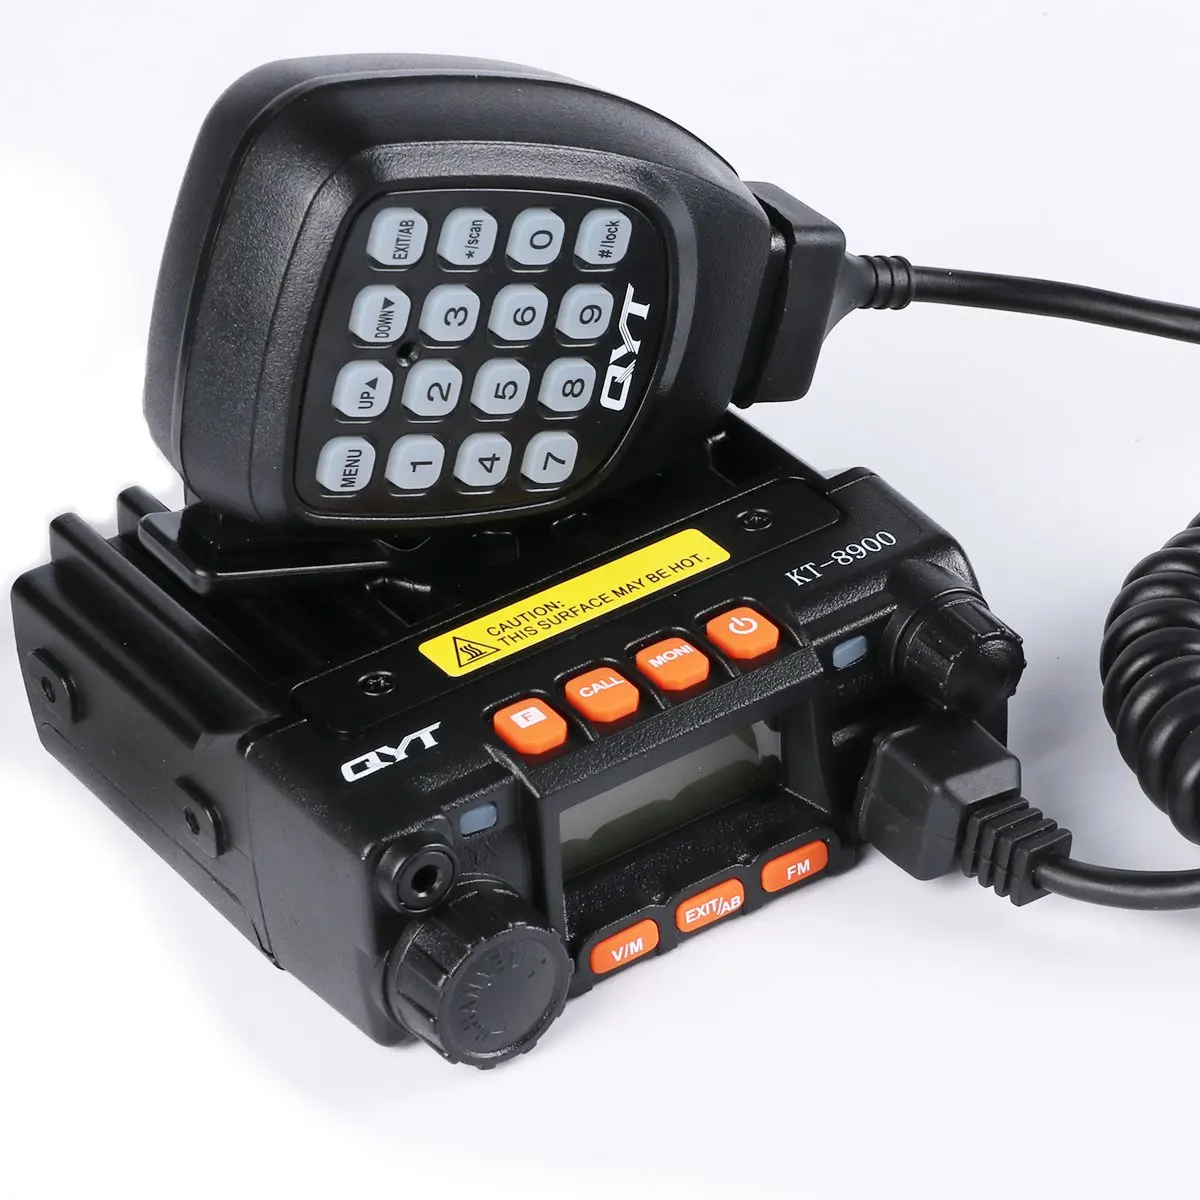 

QYT KT-8900 Dual Band 25-Watt Mini Mobile Transceiver 136-174MHz/400-480MHz Portable Ham Radio